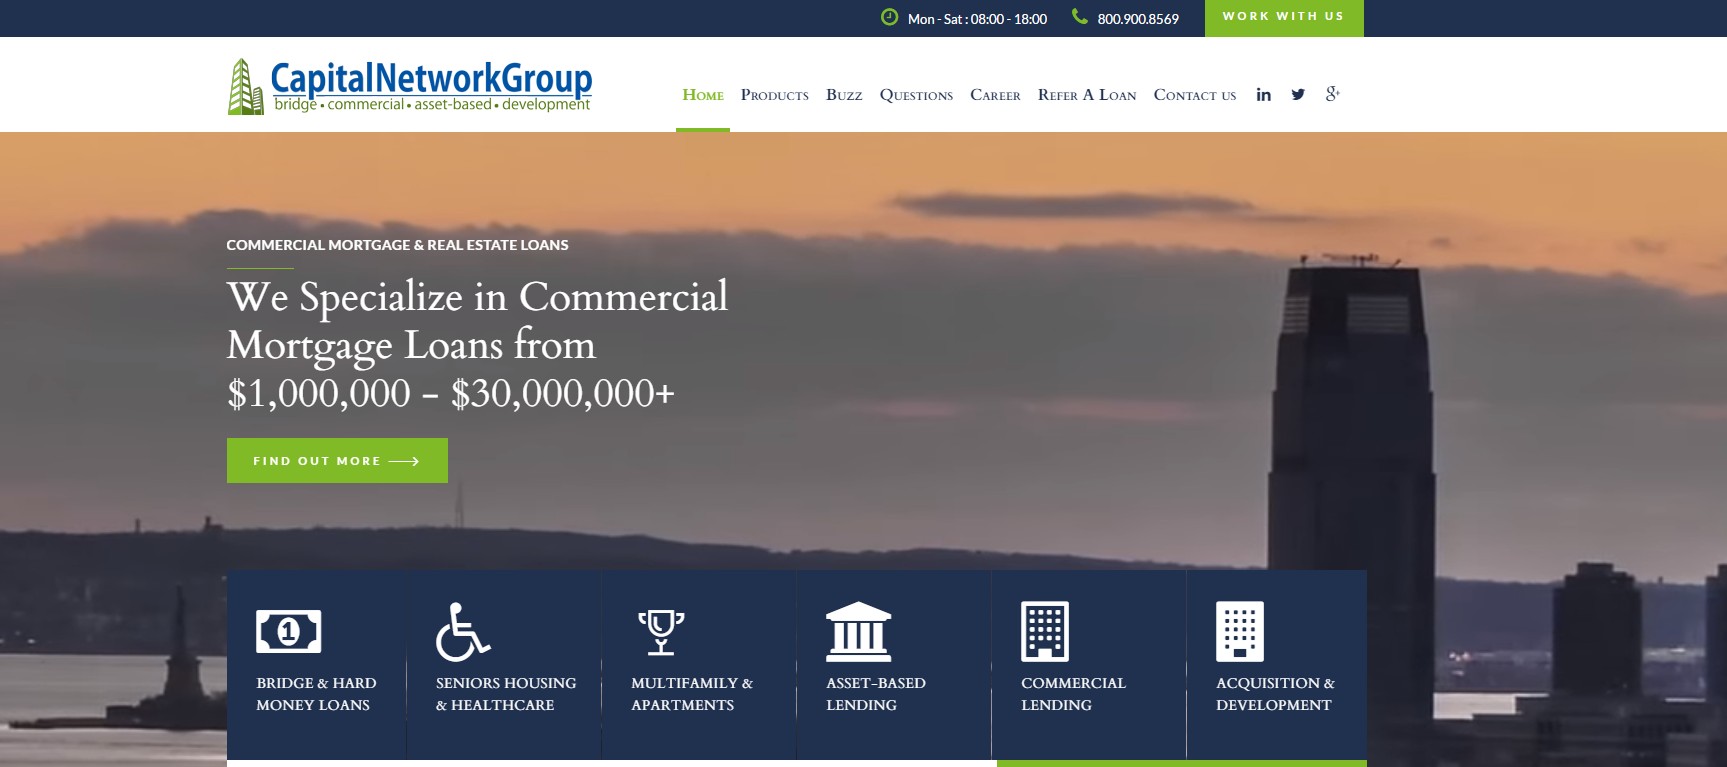 Capital Network Group Commercial Lending Bridge Loans And